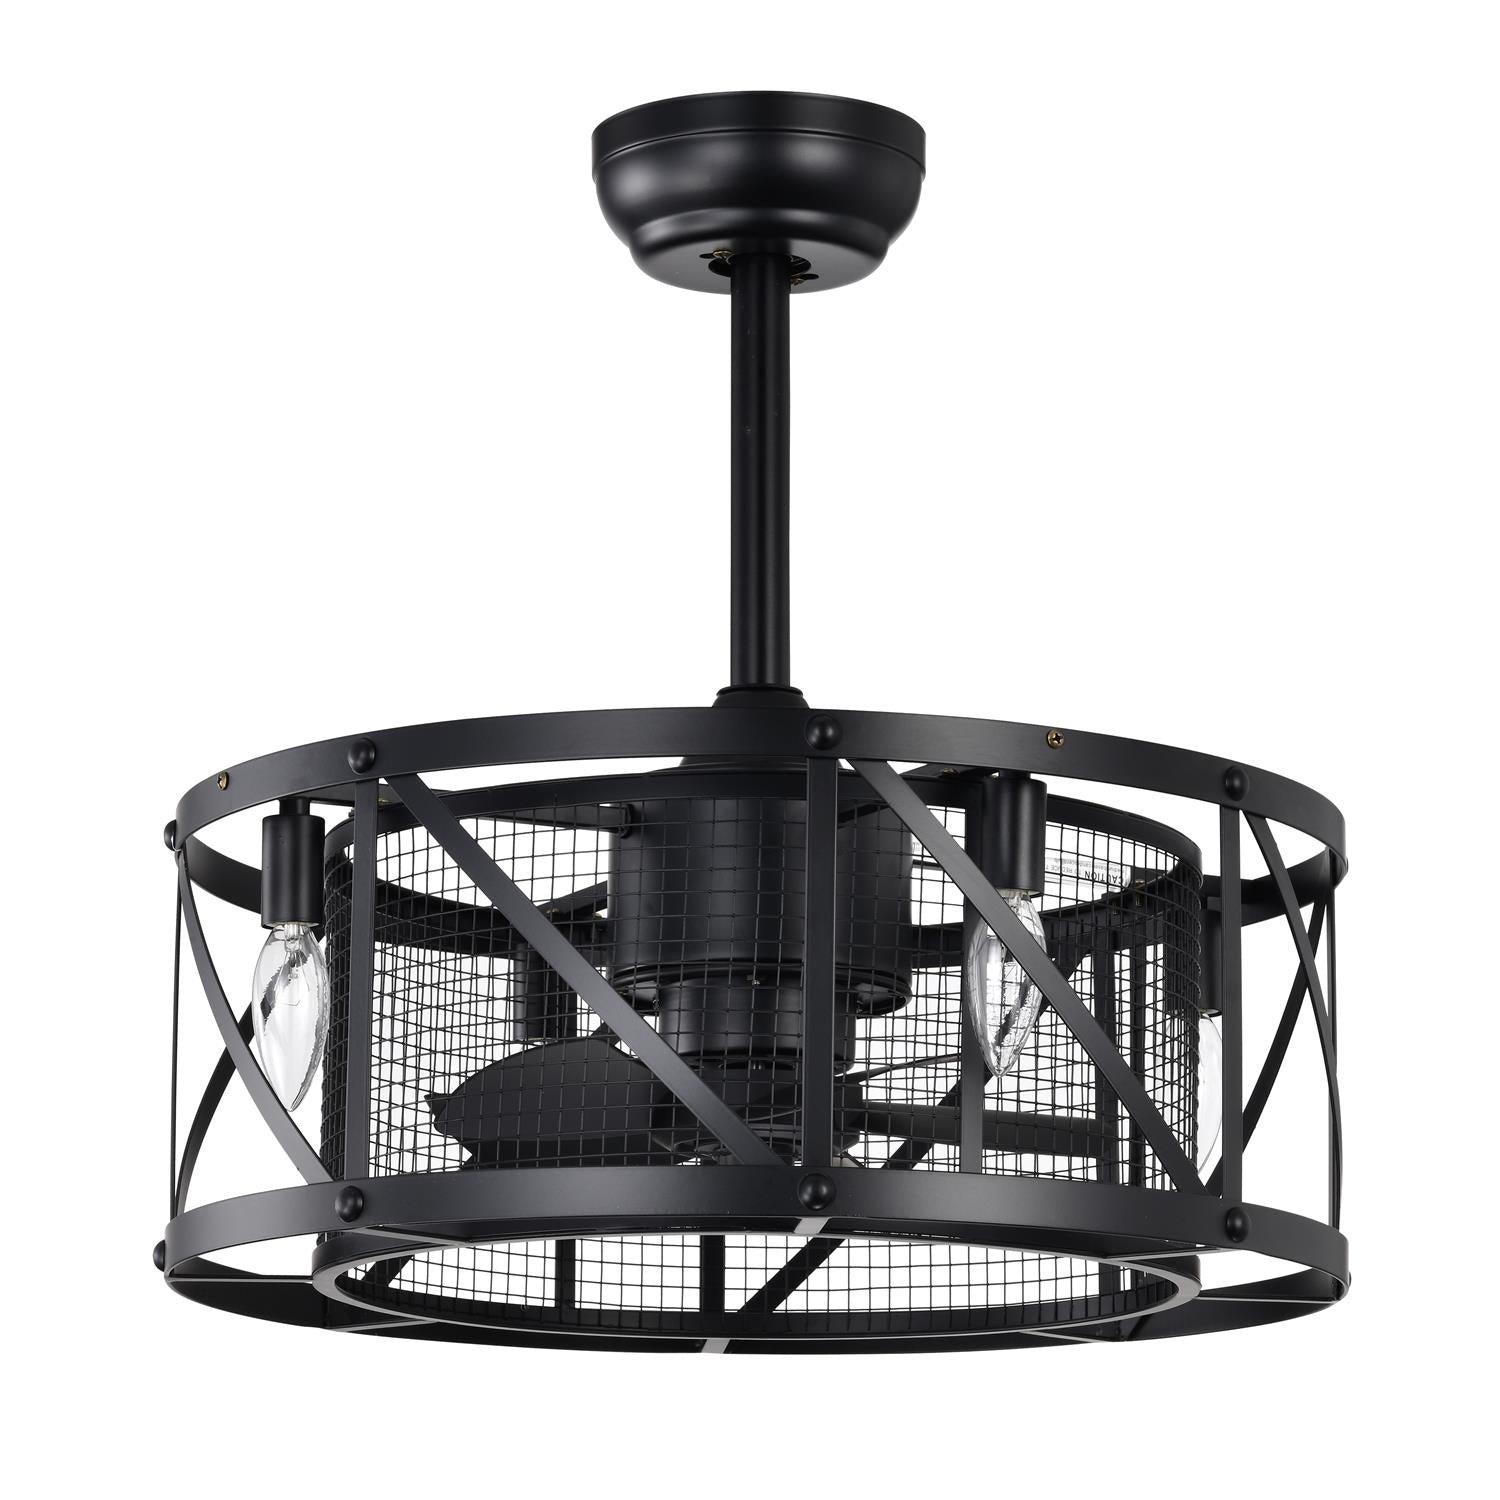 20-Inch Godi Ceiling Fan Light with Remote Control, Dimensions: 19.8-Inch Diameter x 15-Inch Height (50.2cm x 38.1cm), Color: Matte Black, Voltage: 120V